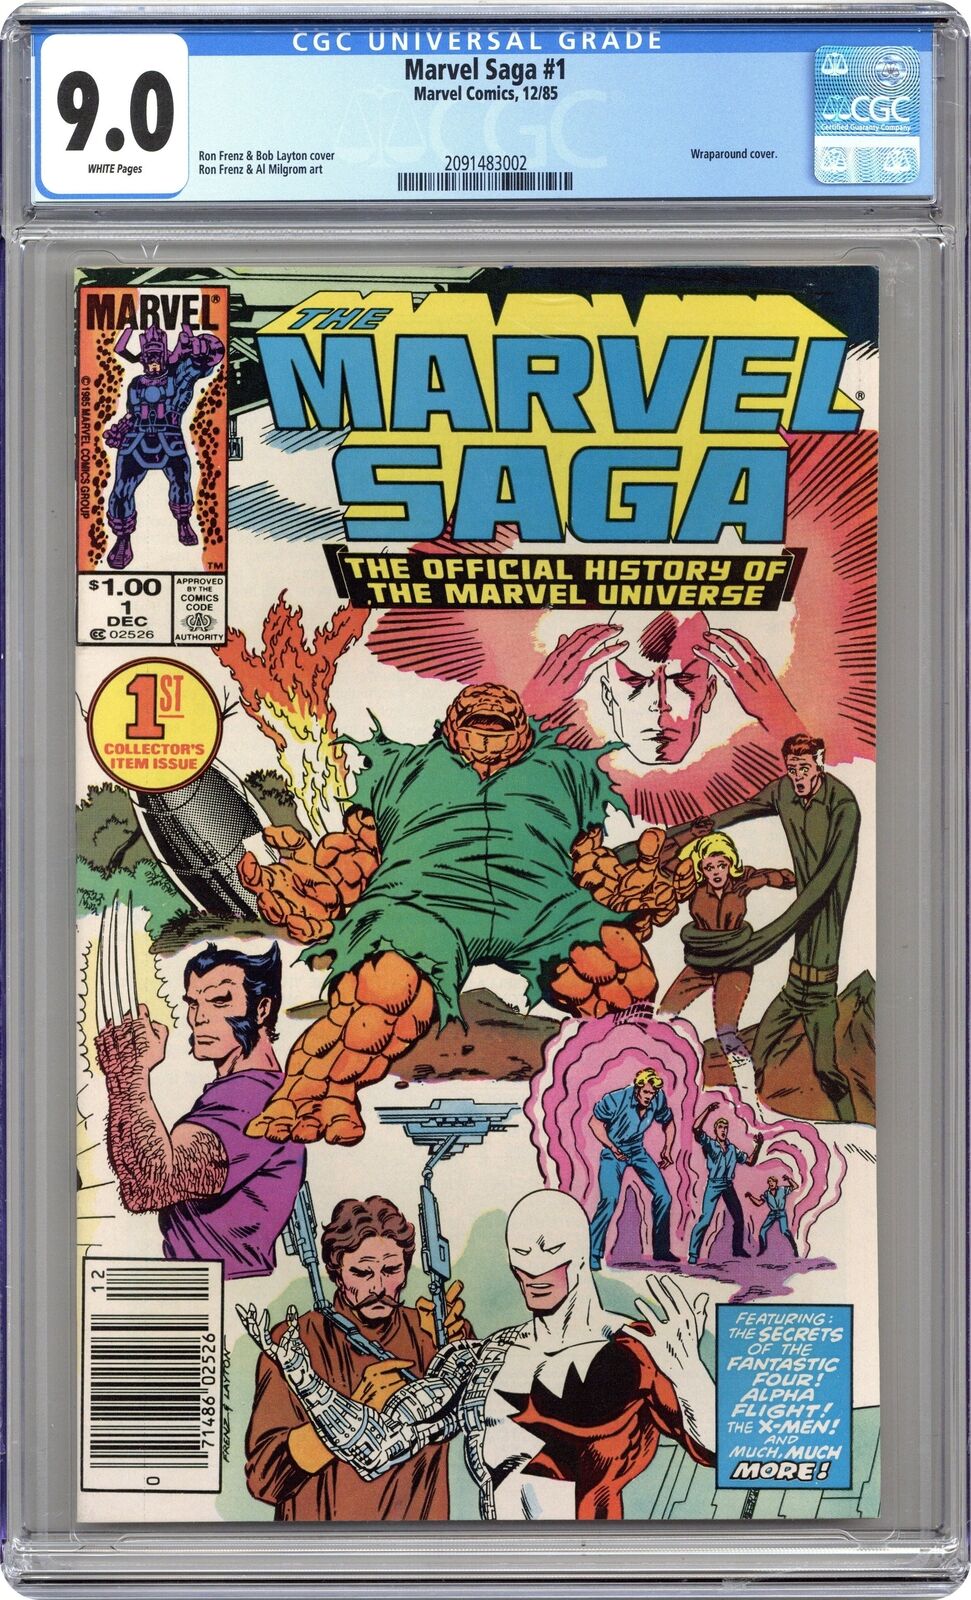 Marvel Saga #1 CGC 9.0 1985 2091483002